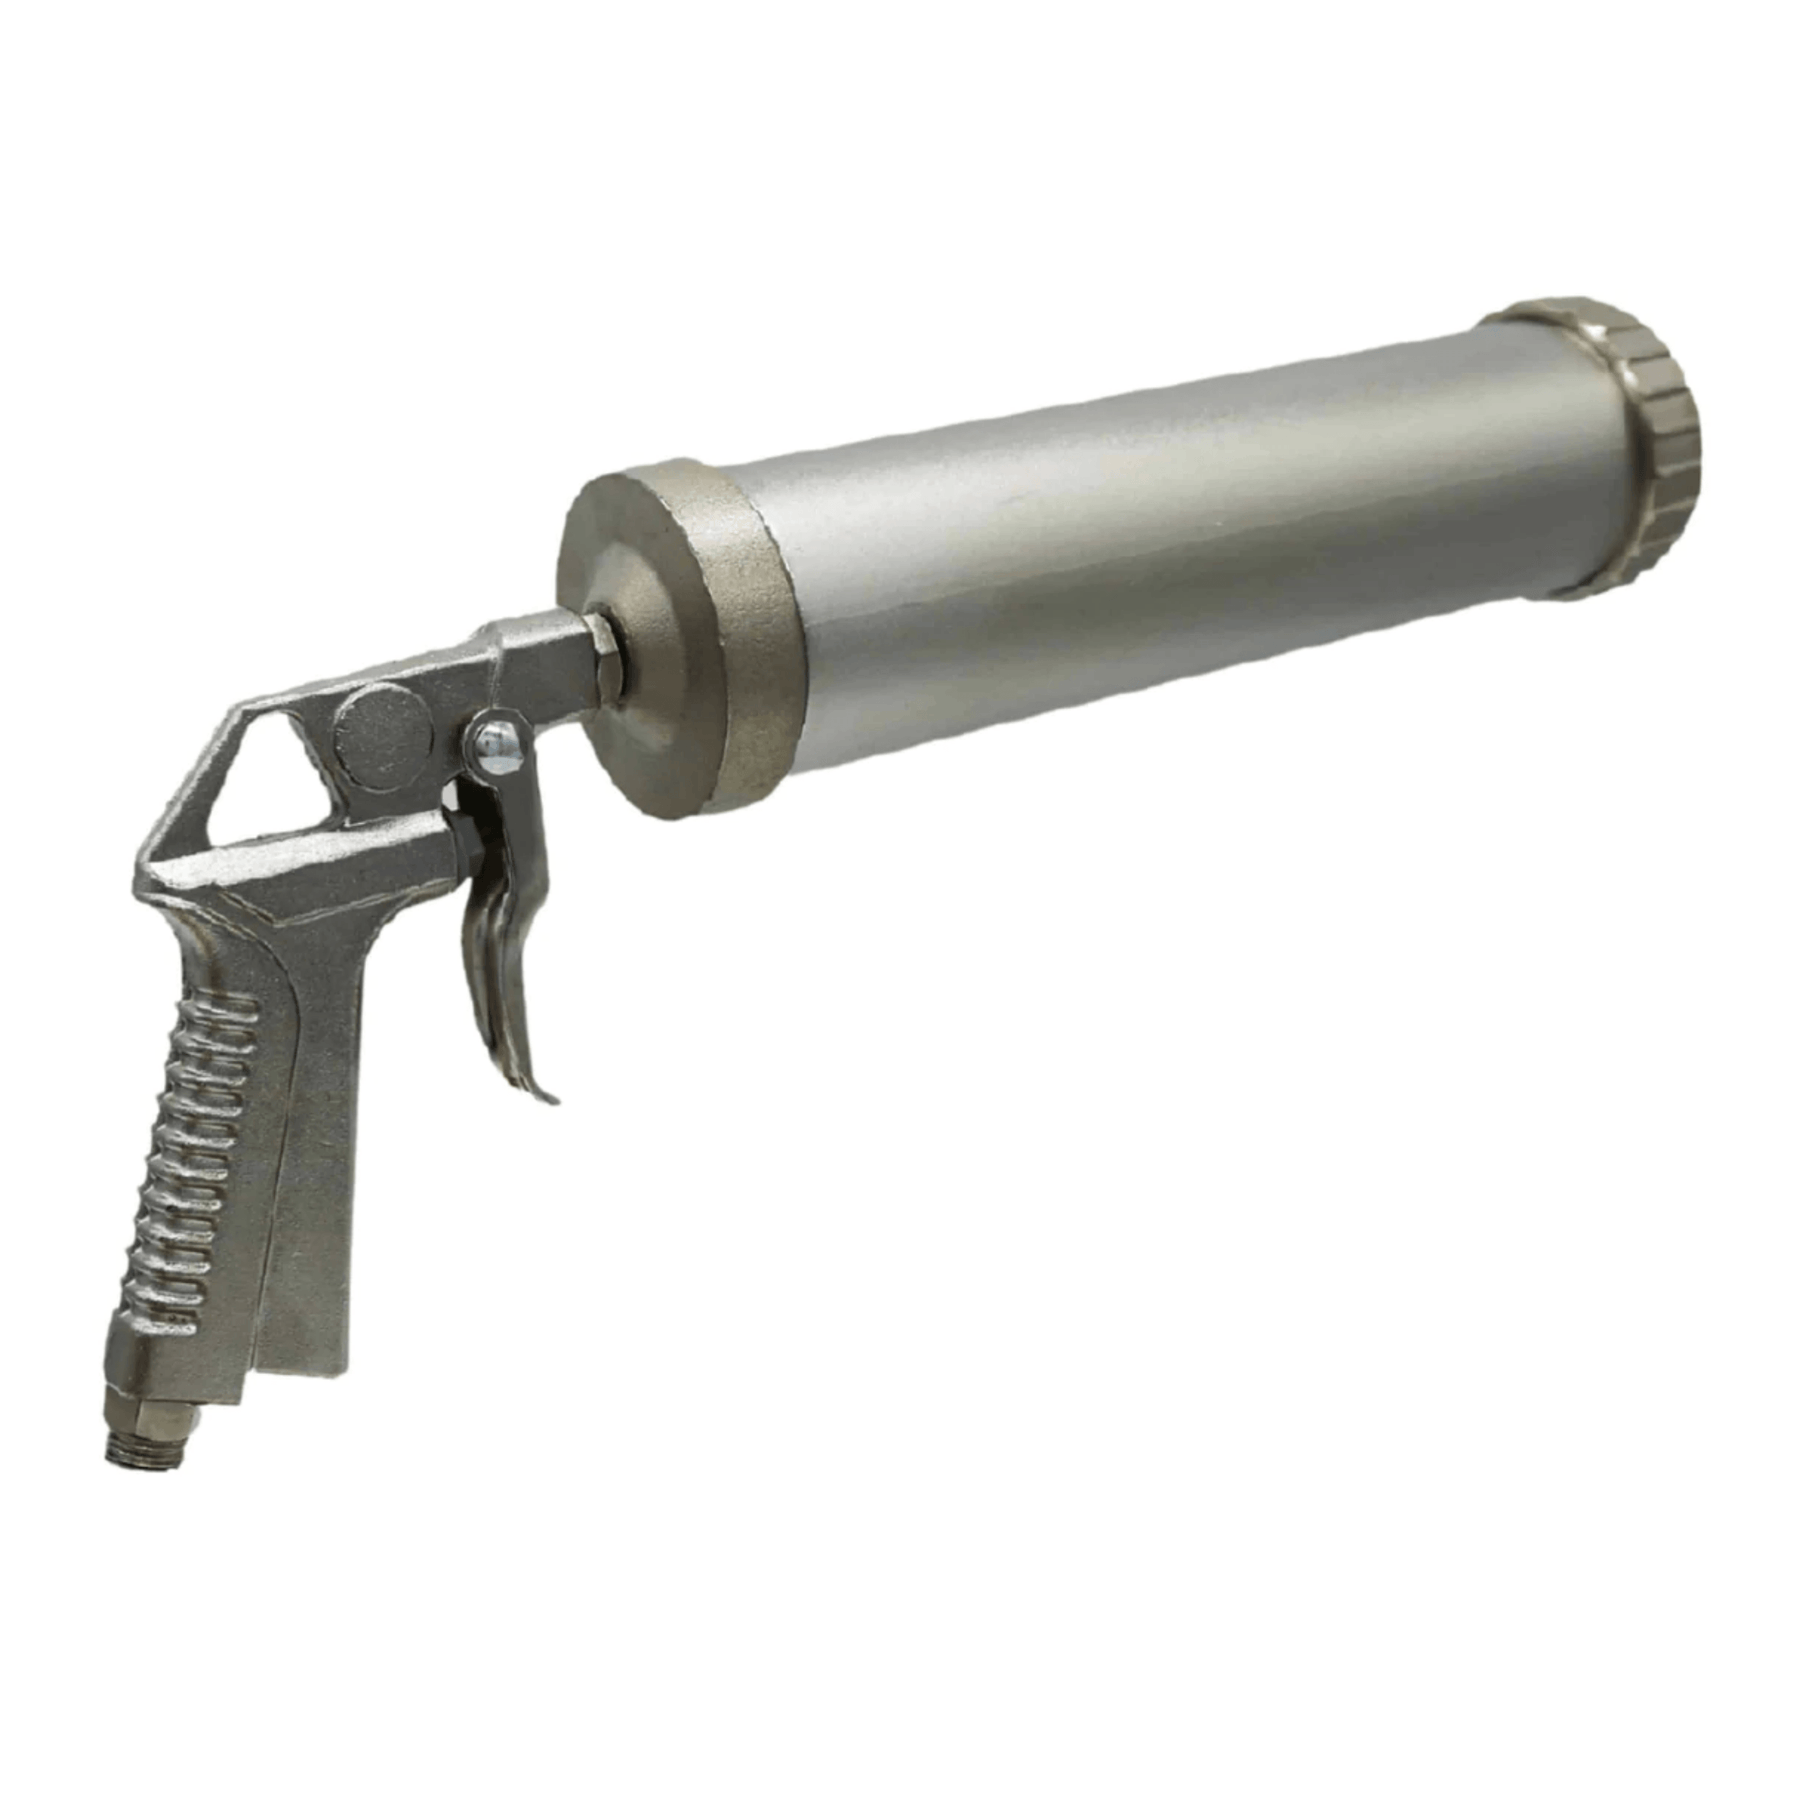 ANI A/525 Sprayable Seam Sealing Gun For Cartridges - 310ml - Maazzo